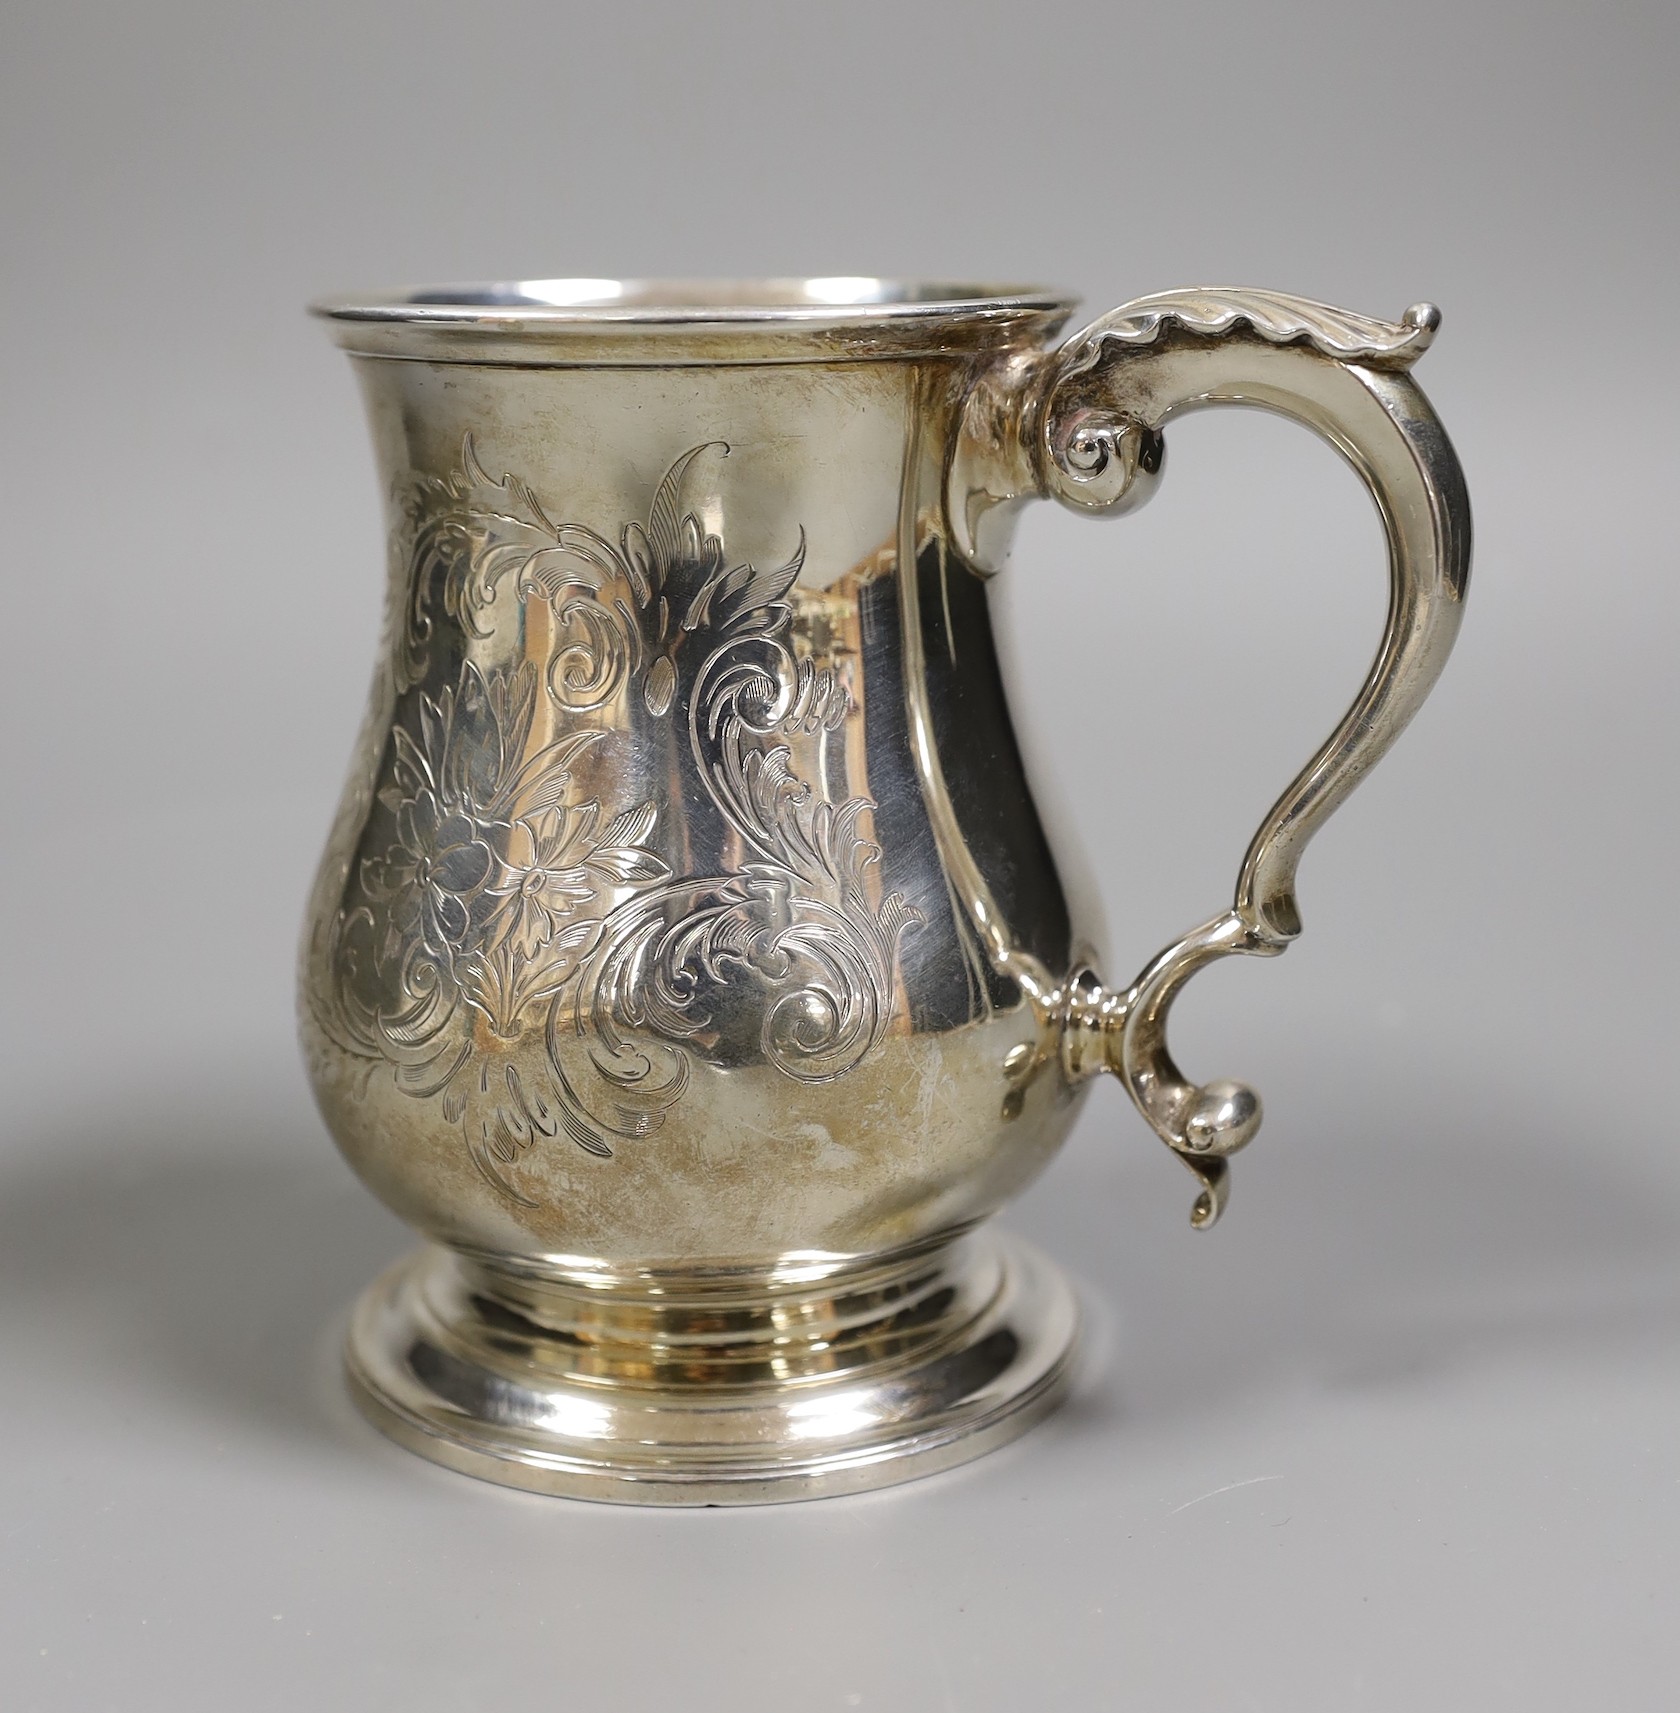 A Victorian foliate engraved silver baluster pint mug, Richards & Brown, London, 1860, height 12.7cm, 11.2oz.